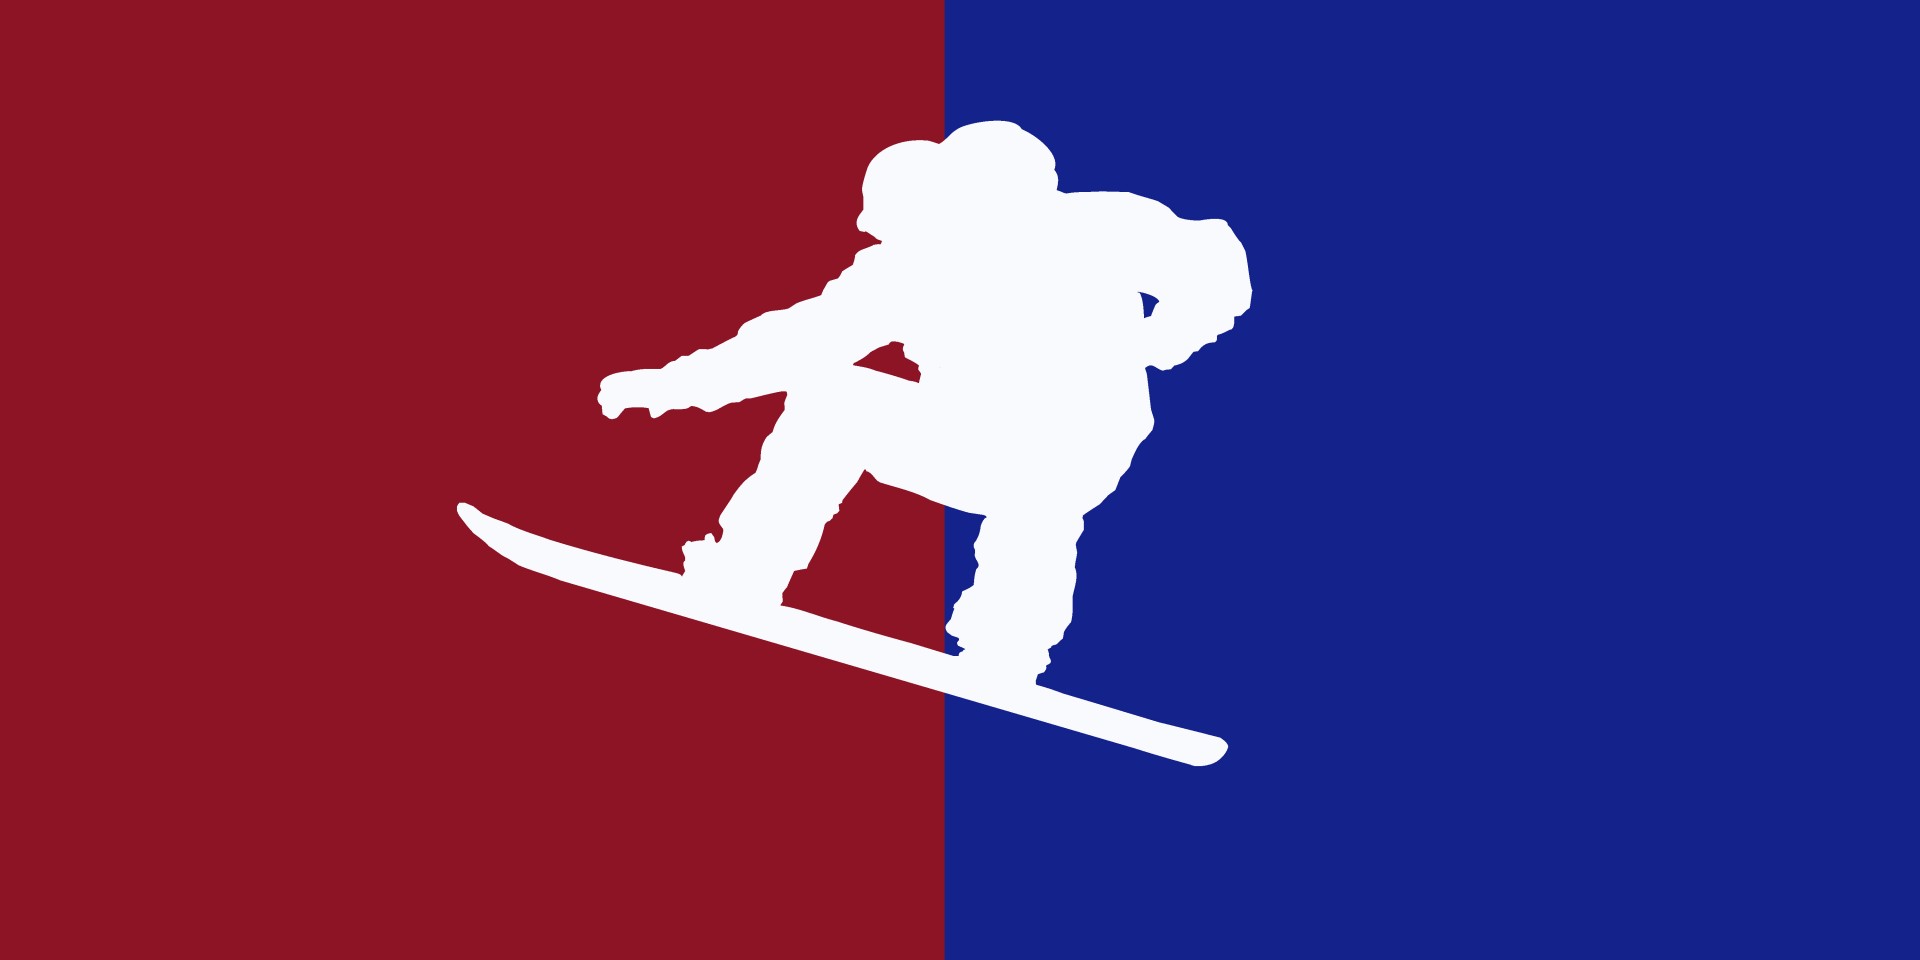 Snowboarder Air